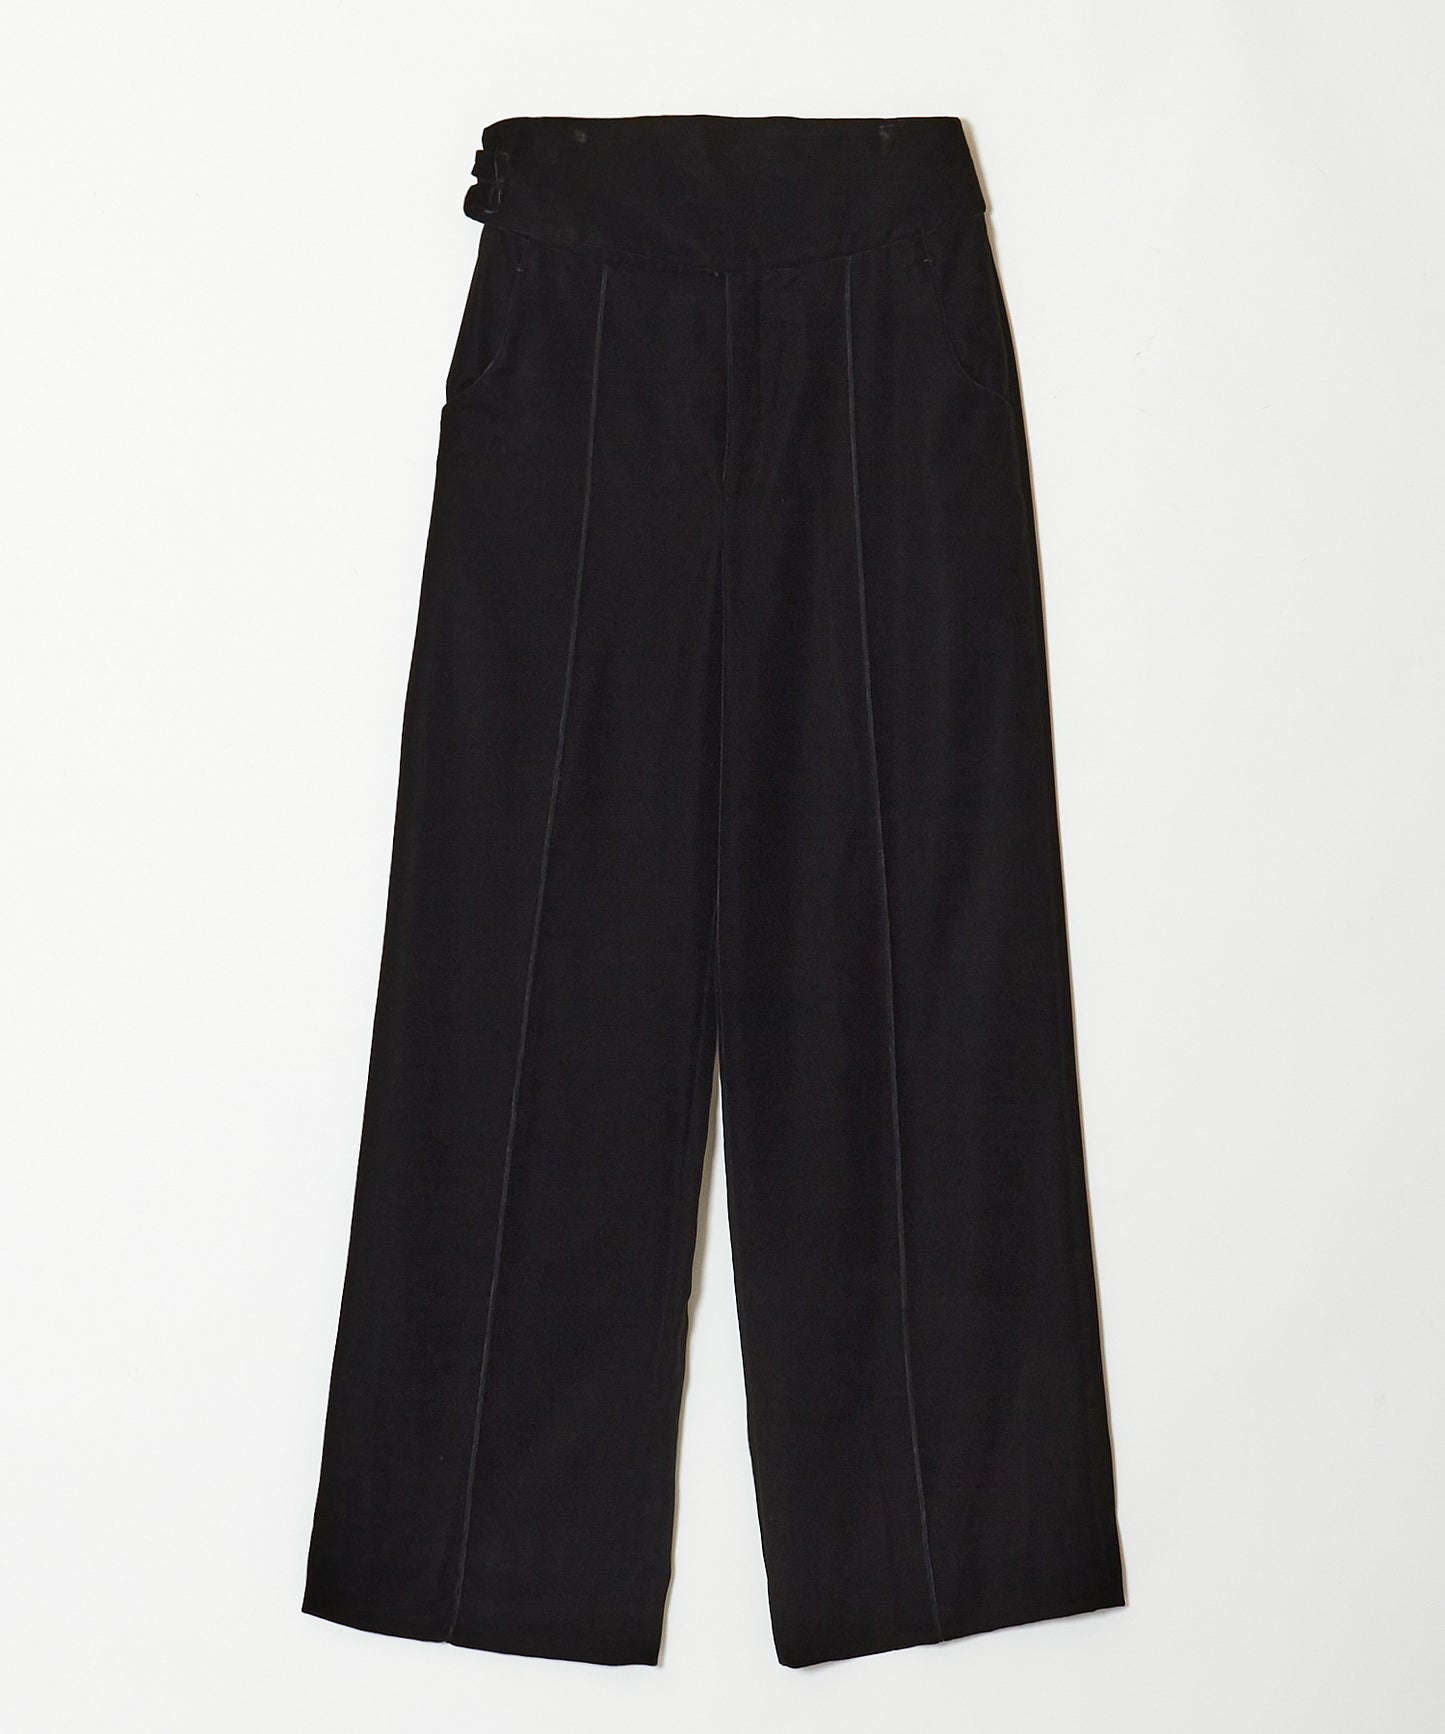 velvet pants【Delivery in February 2023】